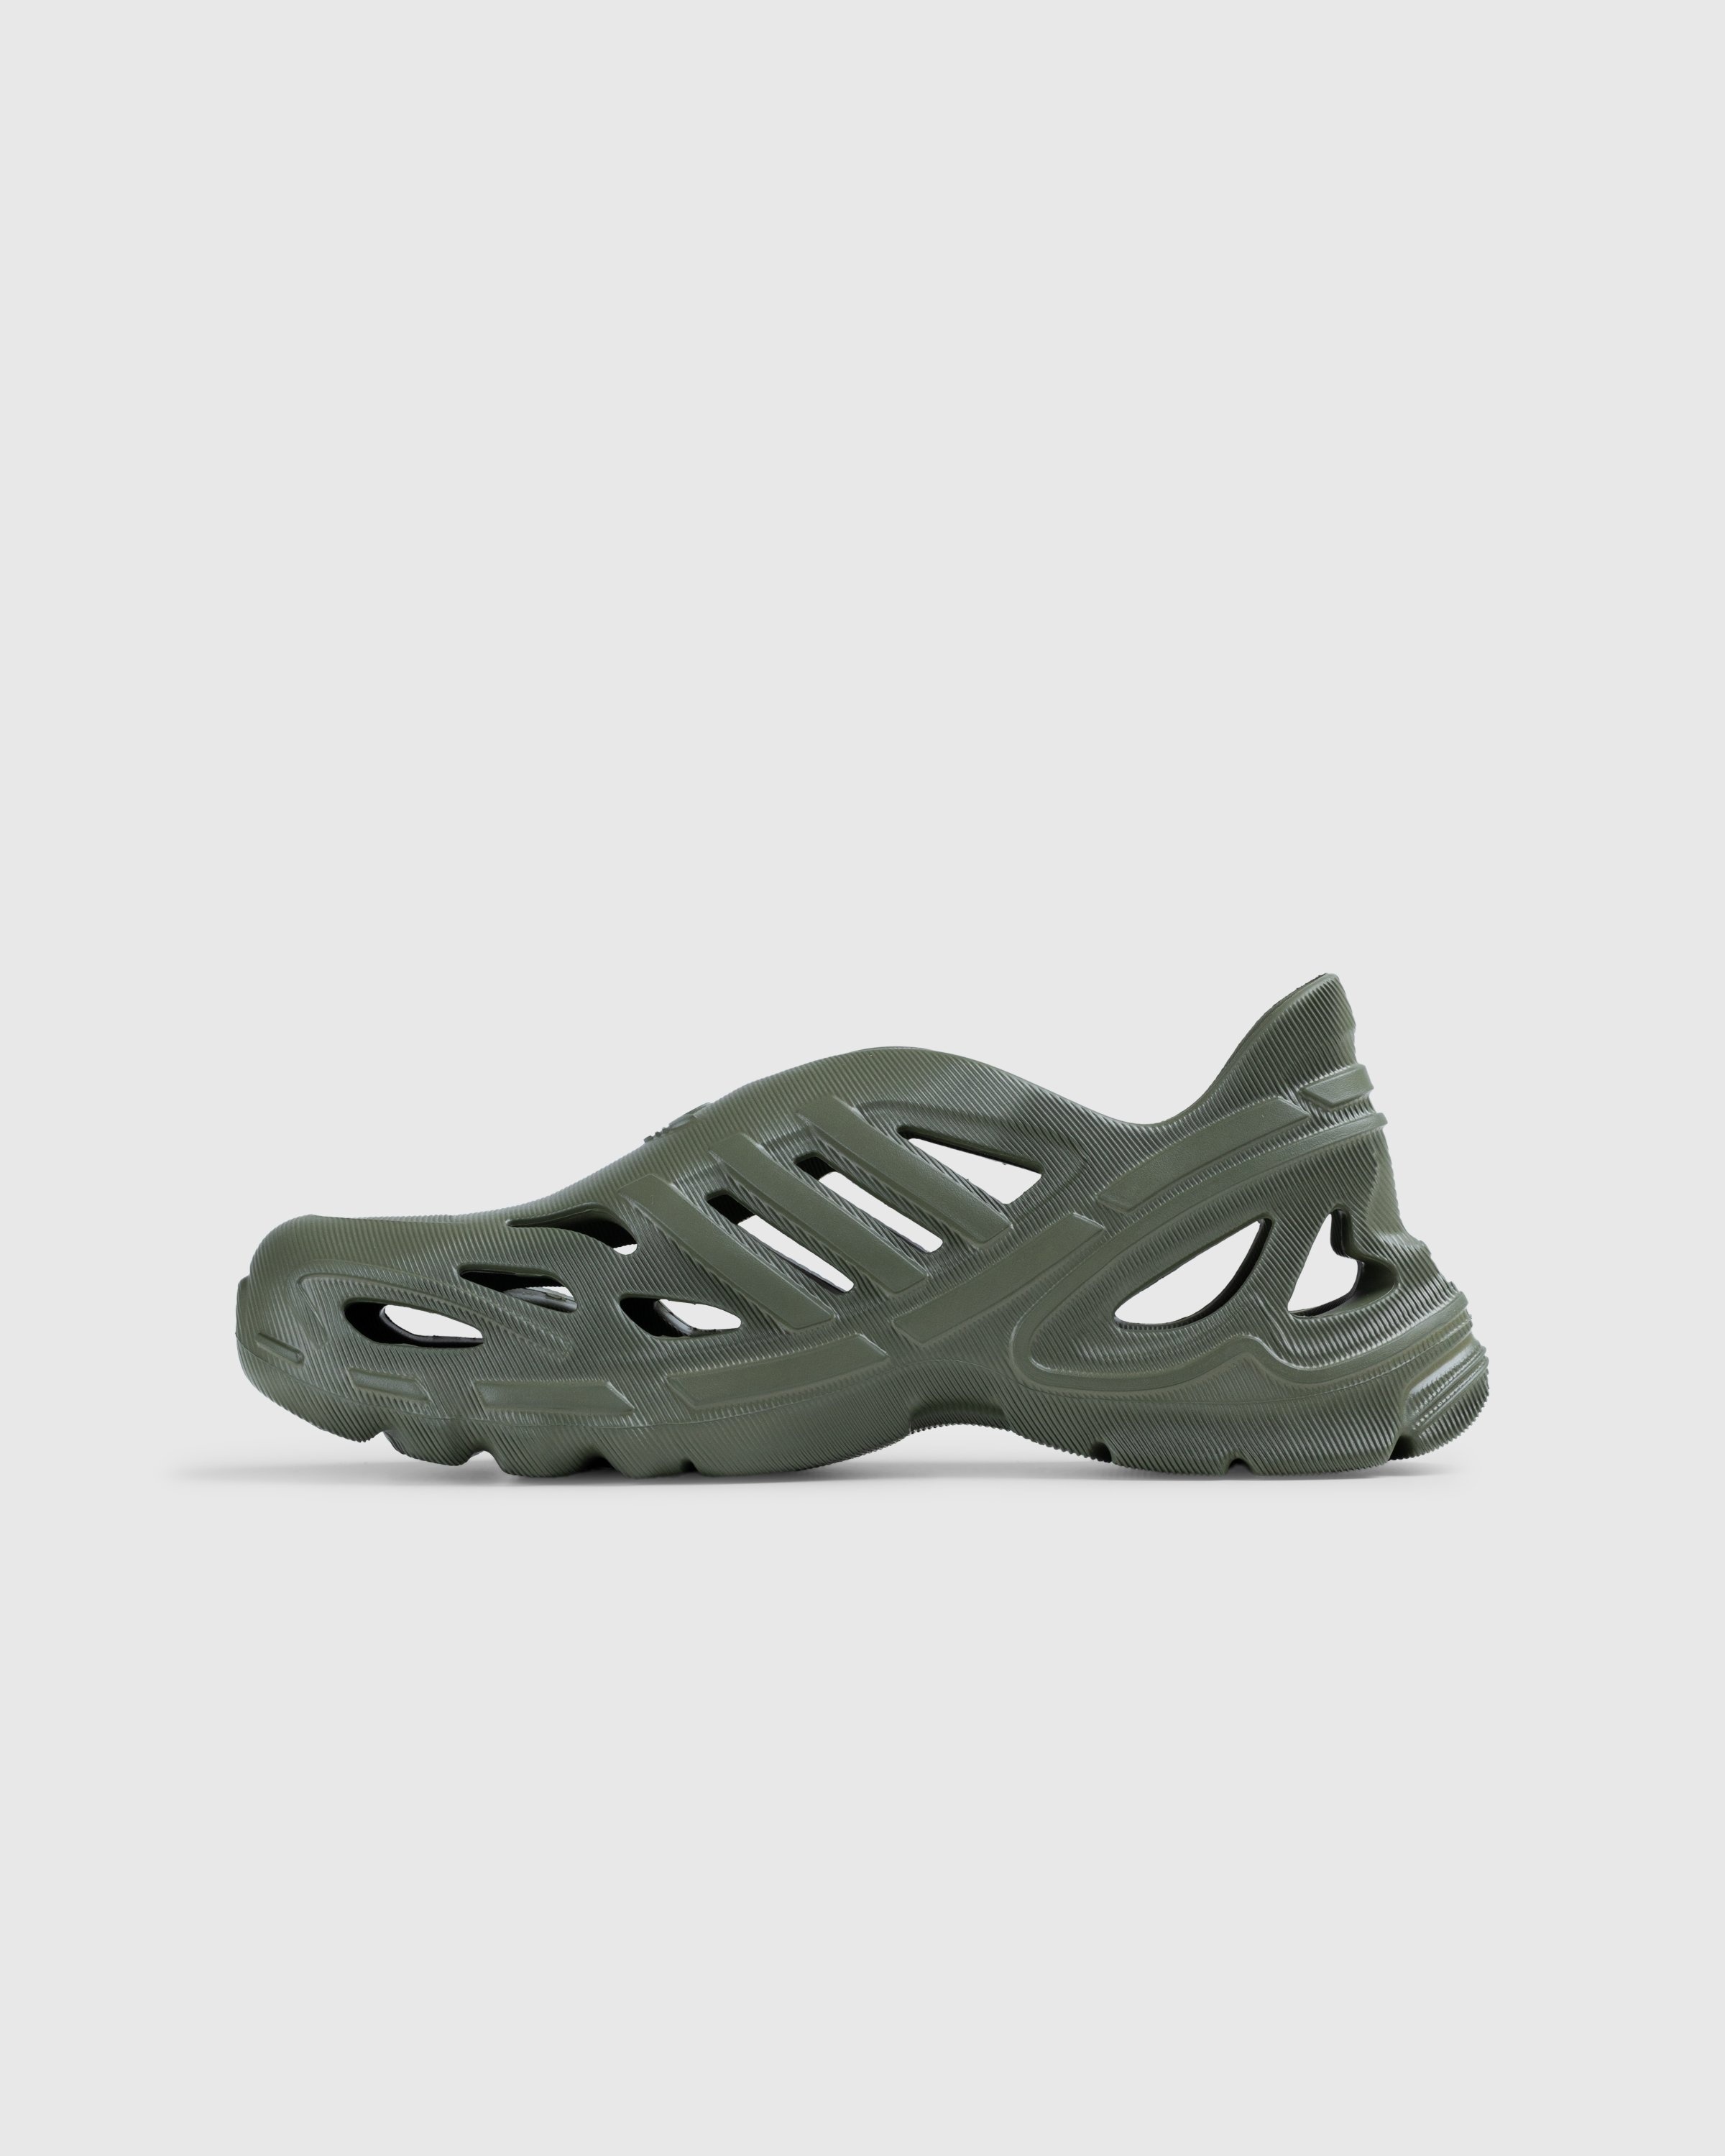 Adidas – Adifom Supernova Focus Olive - Sneakers - Green - Image 2